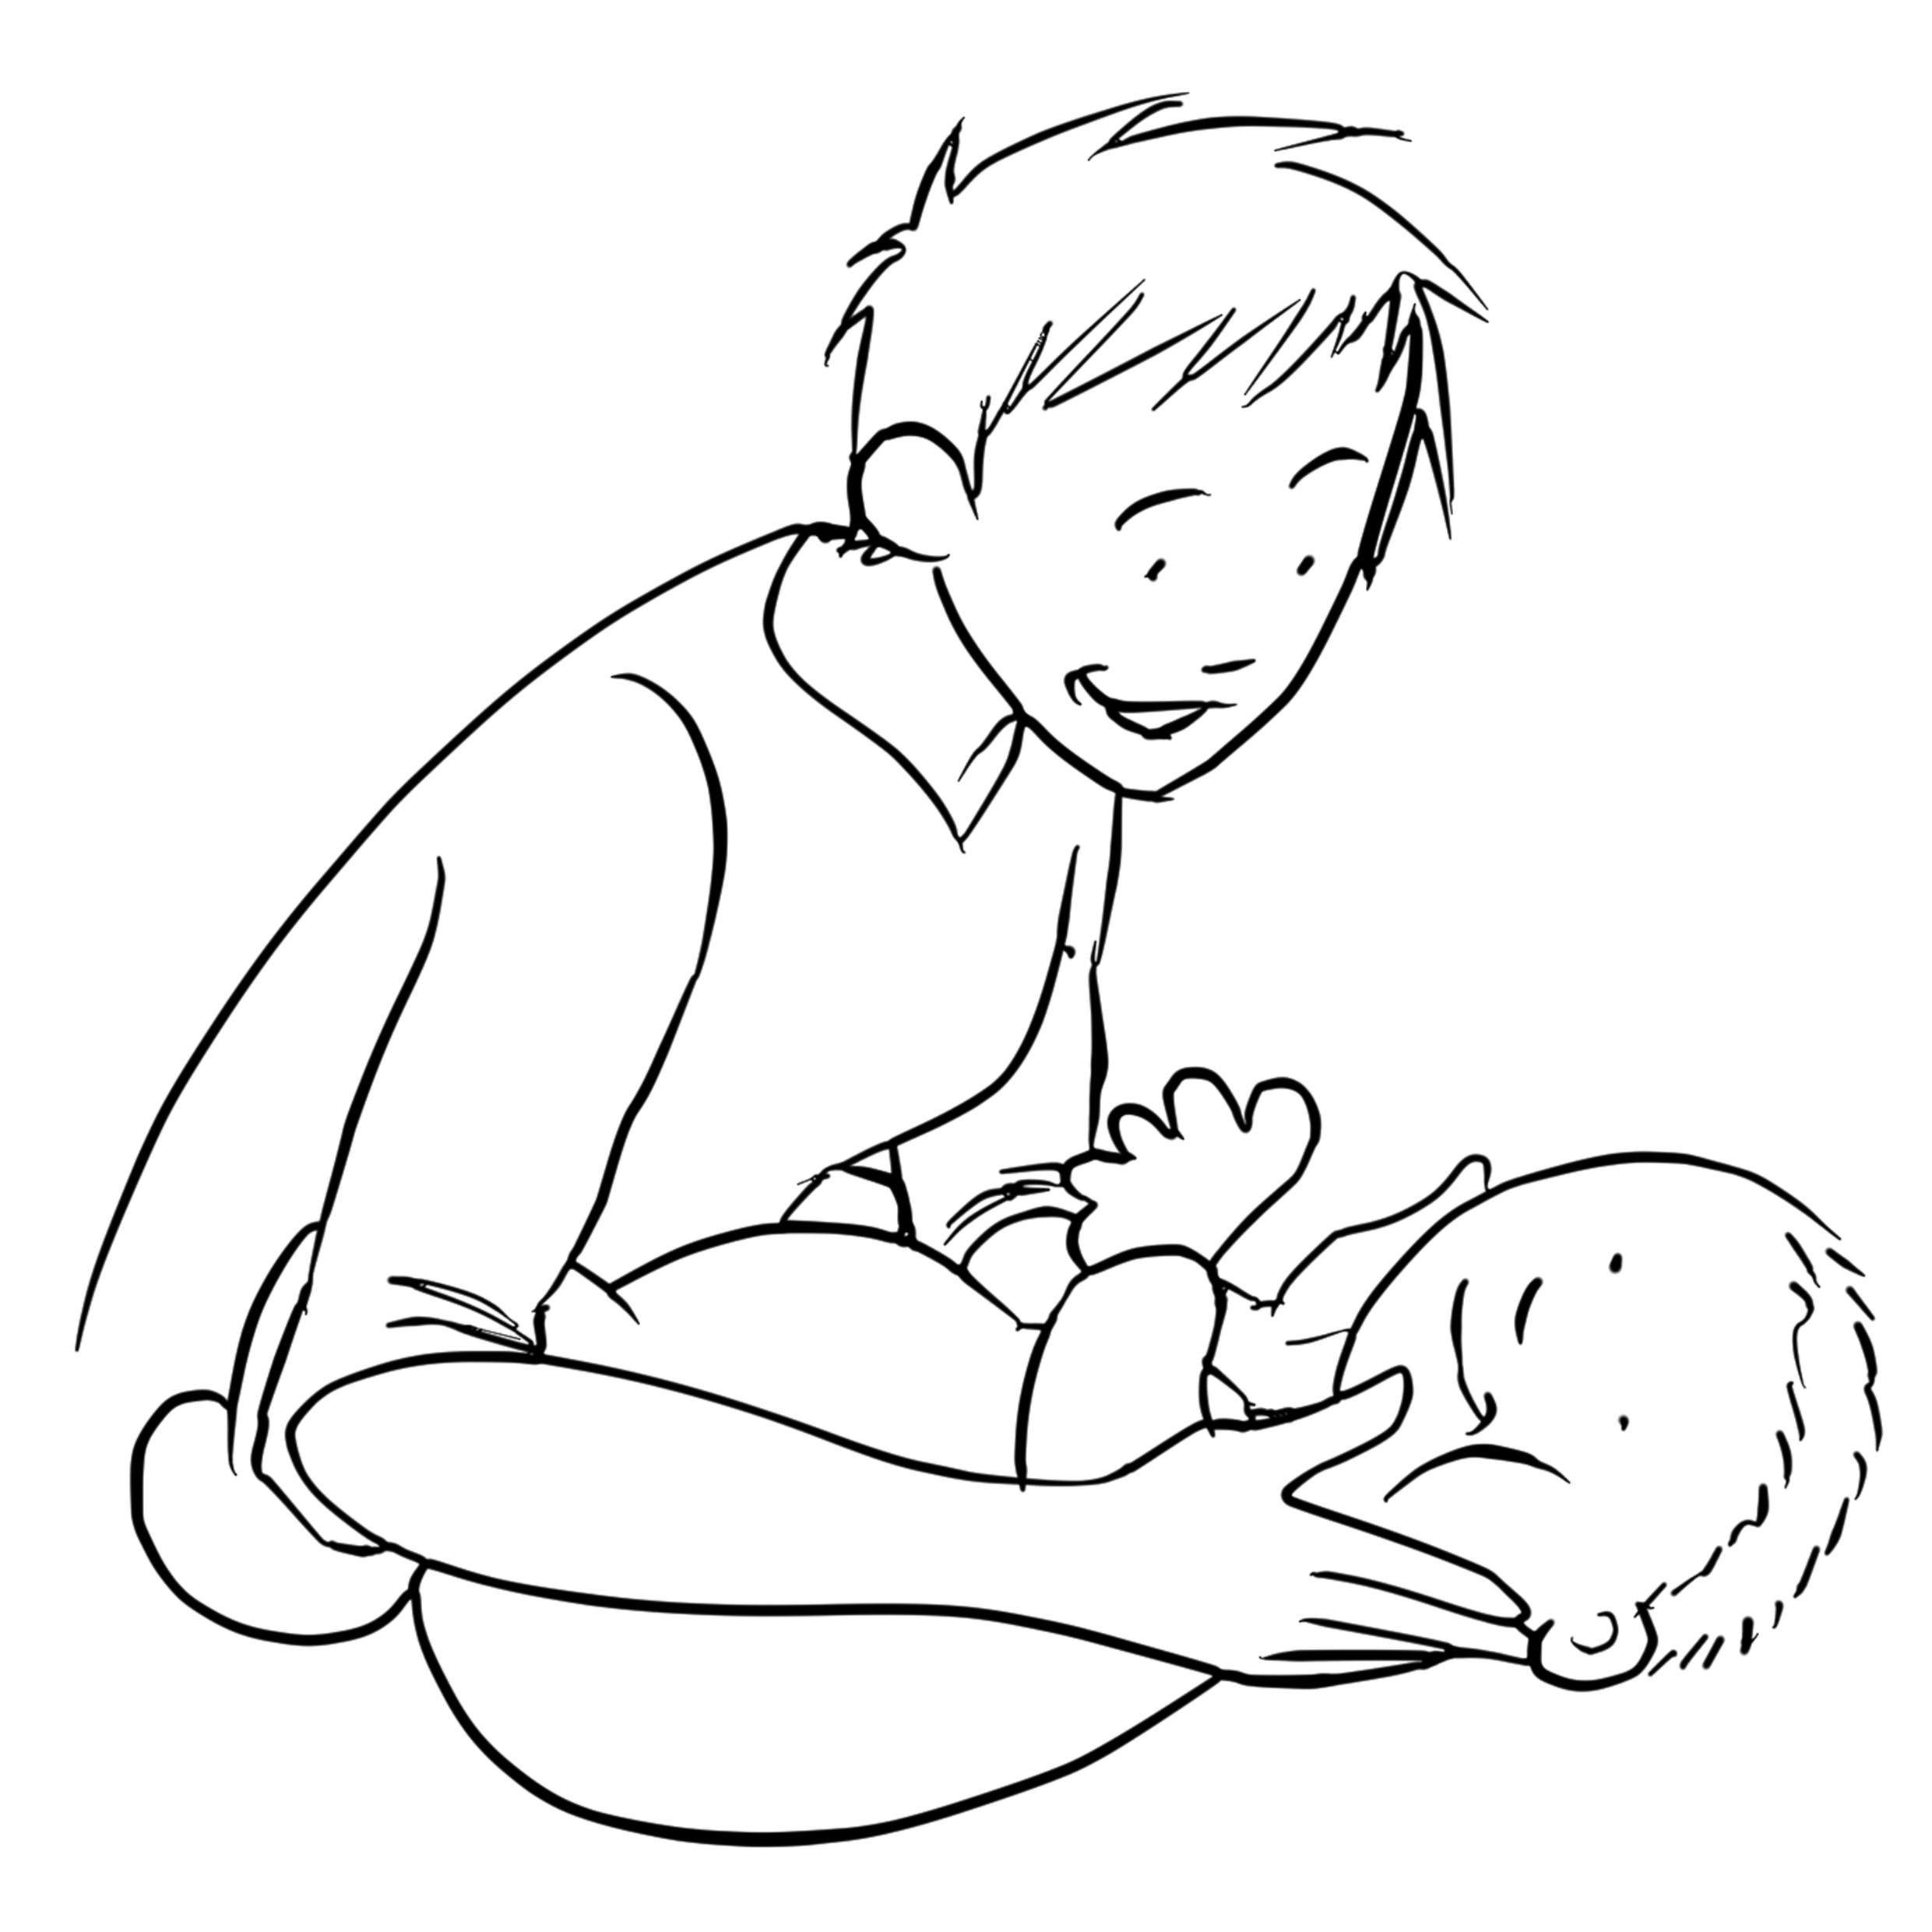 Adult massaging baby's cheeks